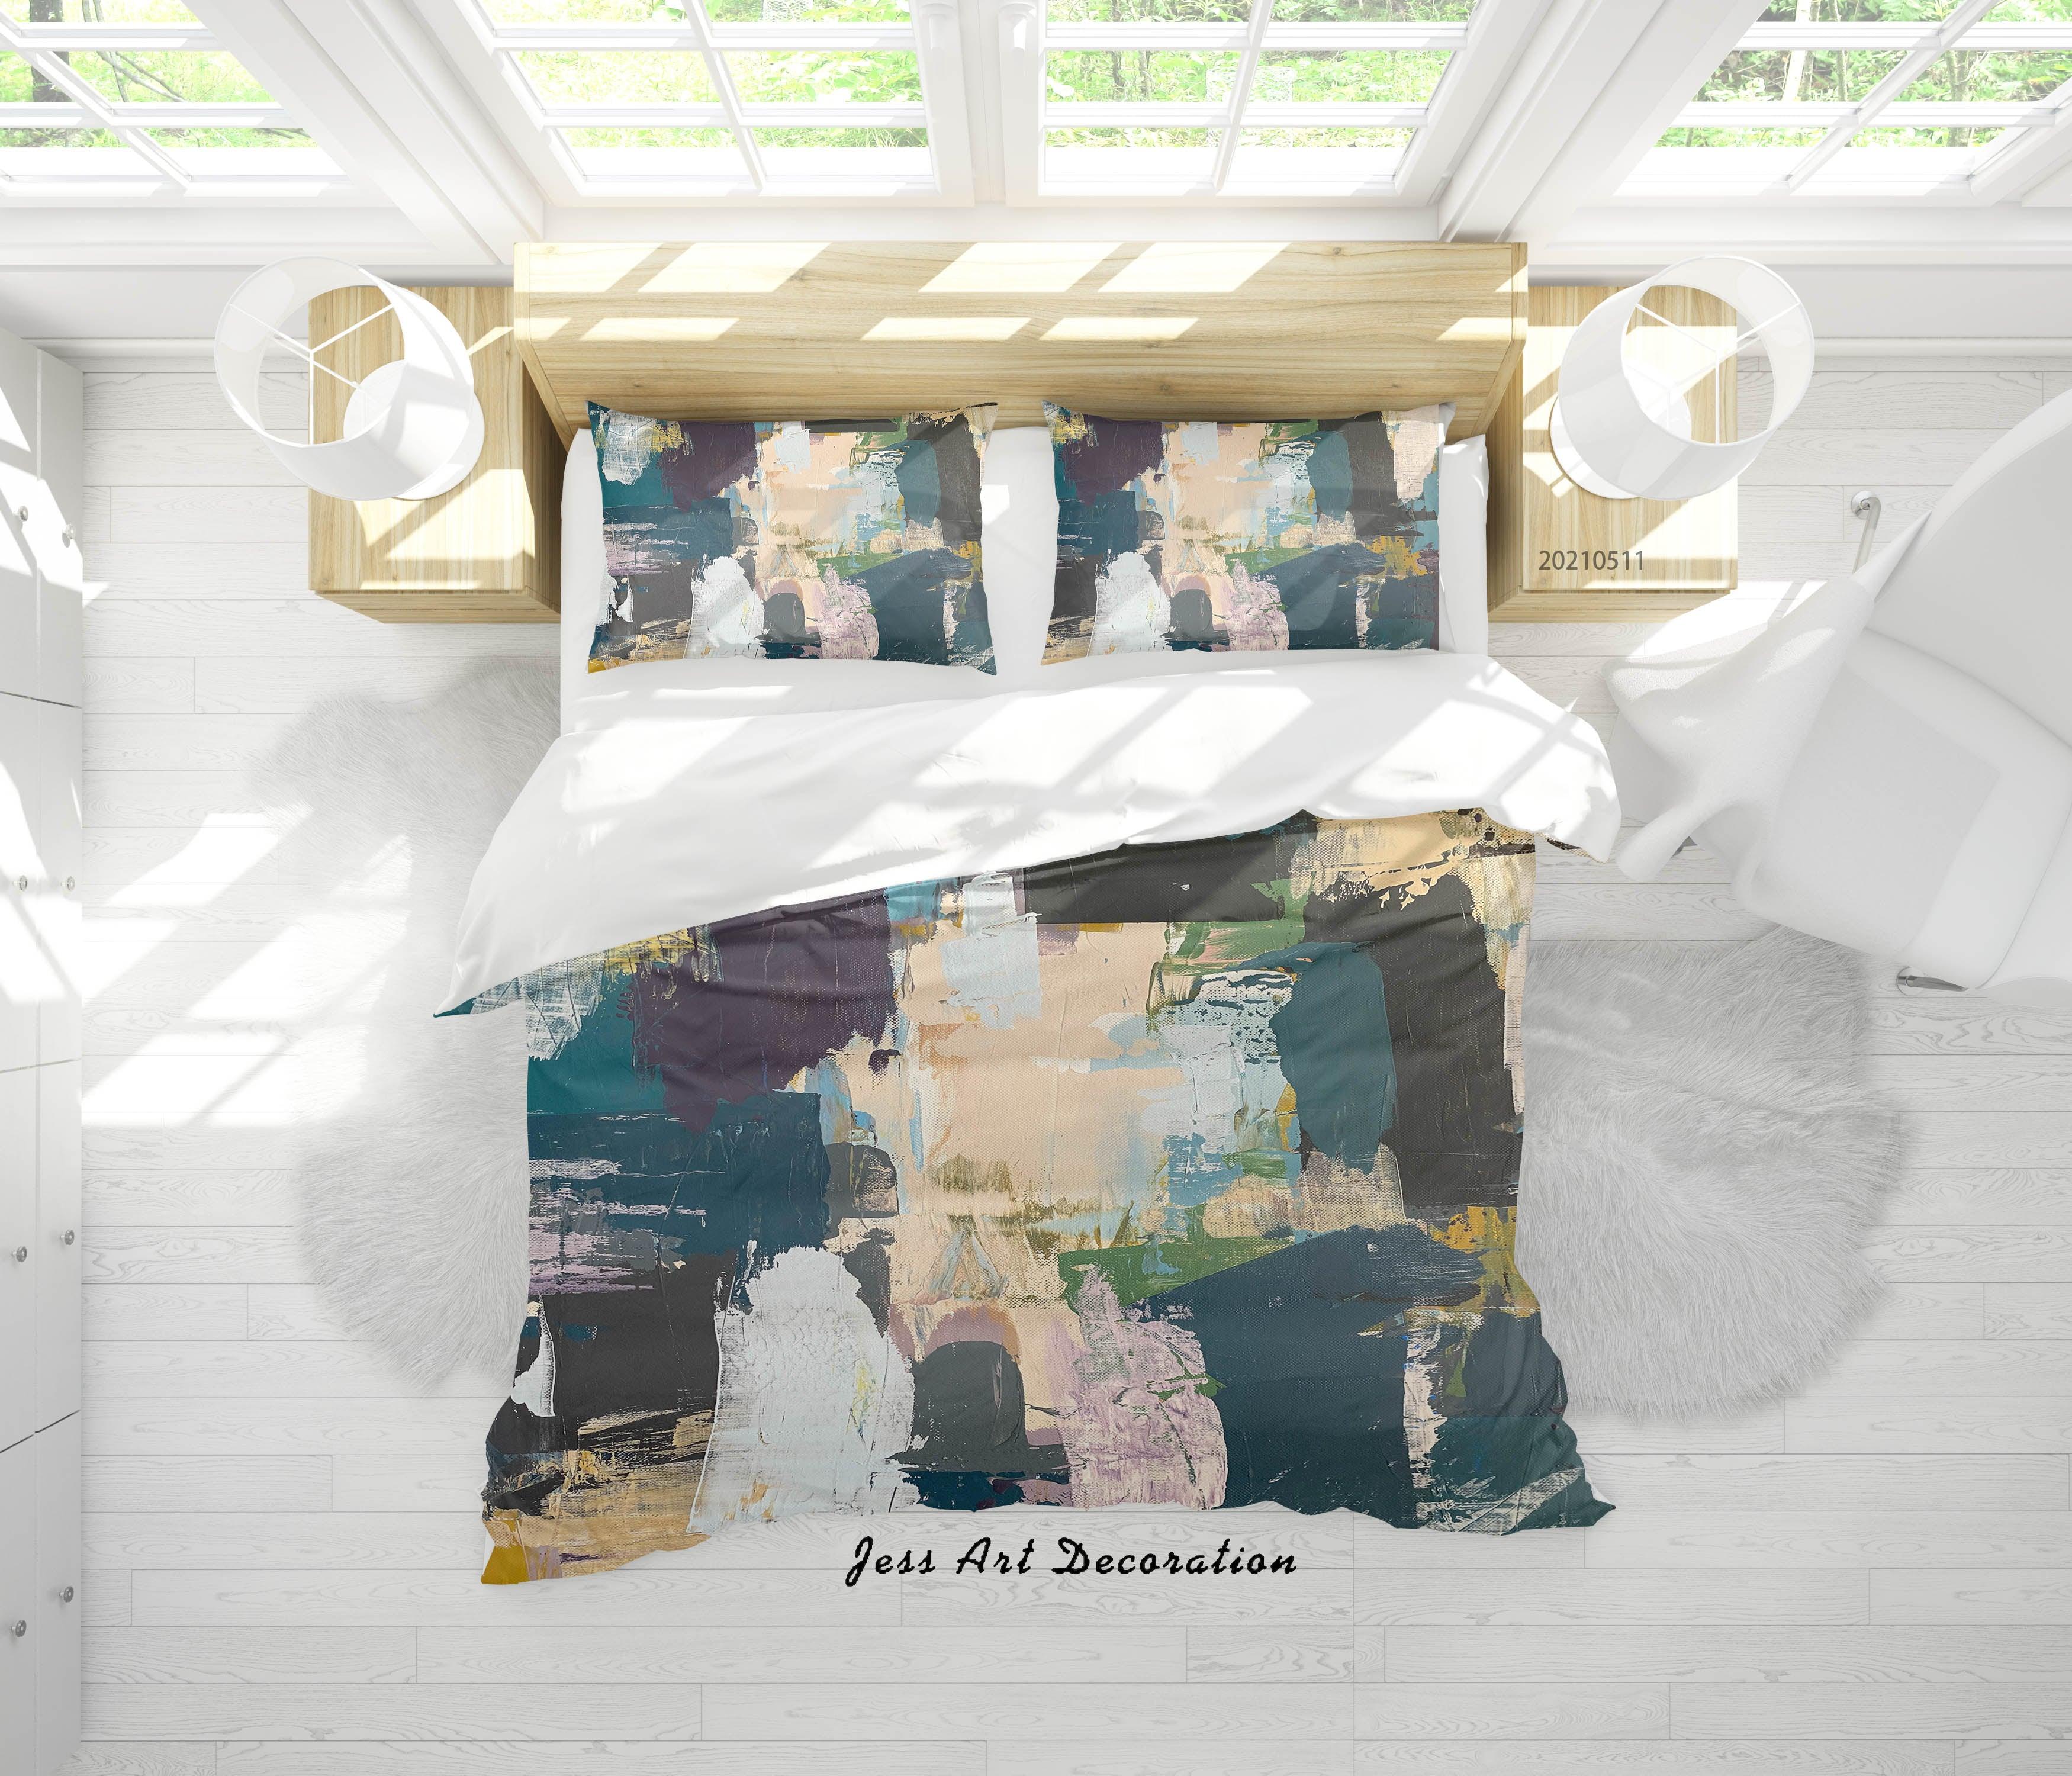 3D Abstract Color Graffiti Quilt Cover Set Bedding Set Duvet Cover Pillowcases 16- Jess Art Decoration